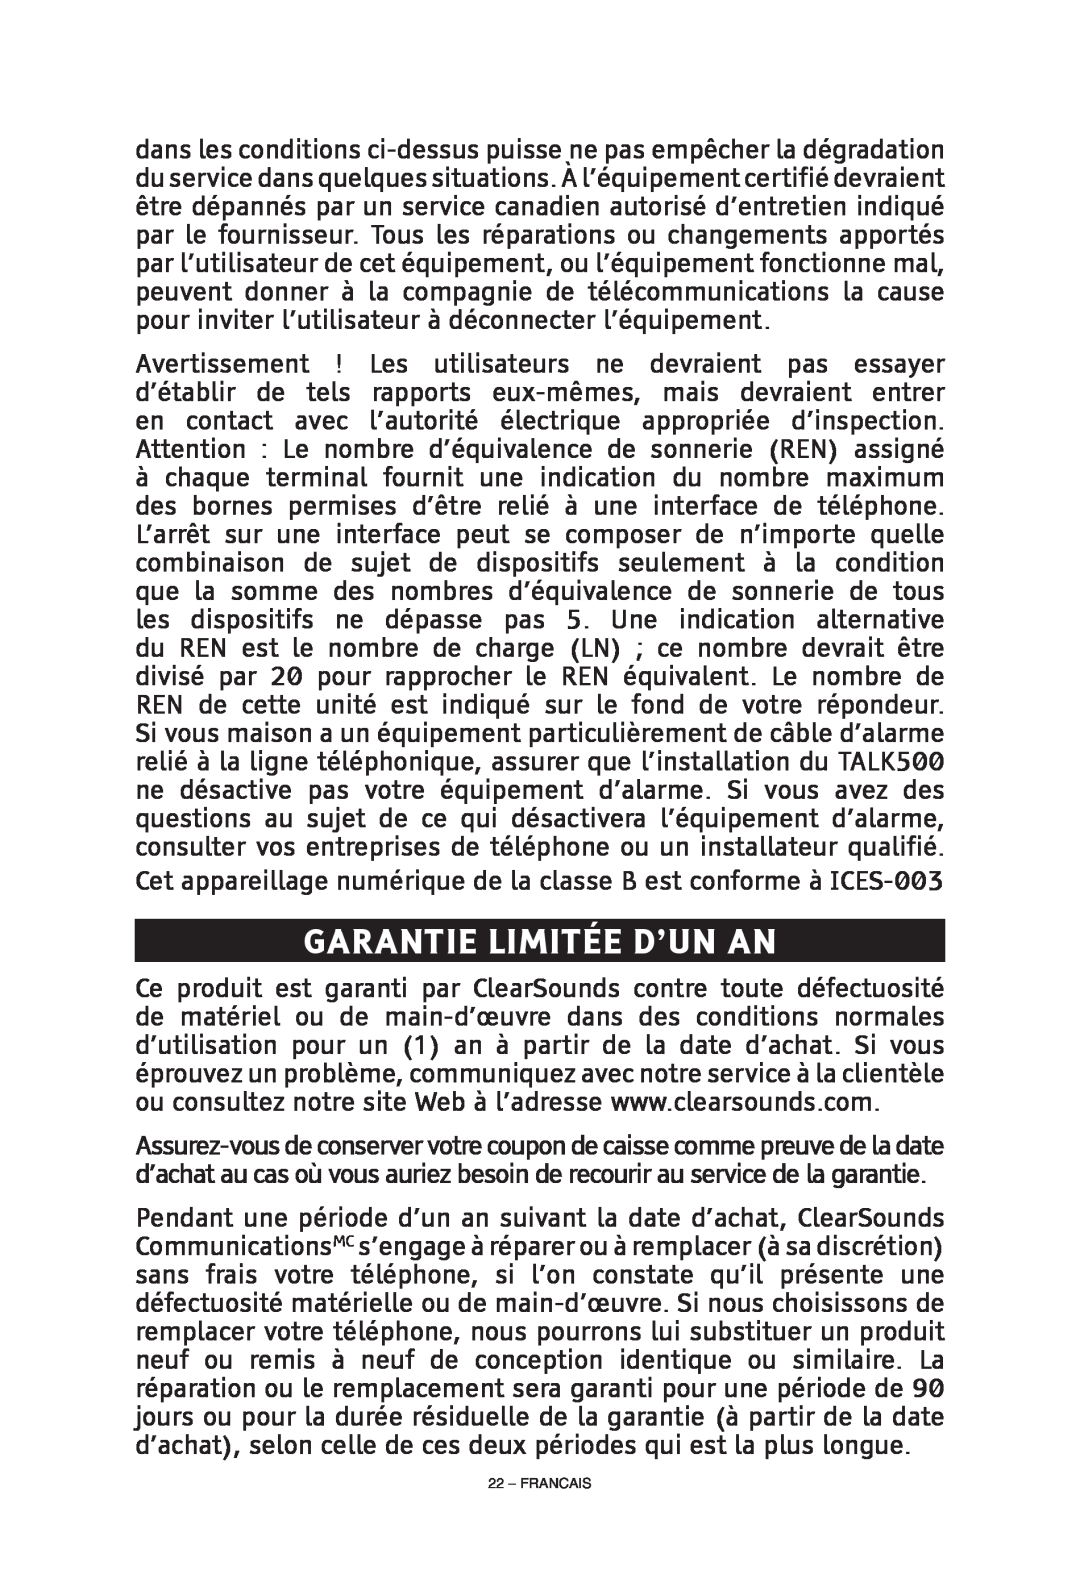 ClearSounds CS-A55 manual Garantie limitée d’un an, Francais 